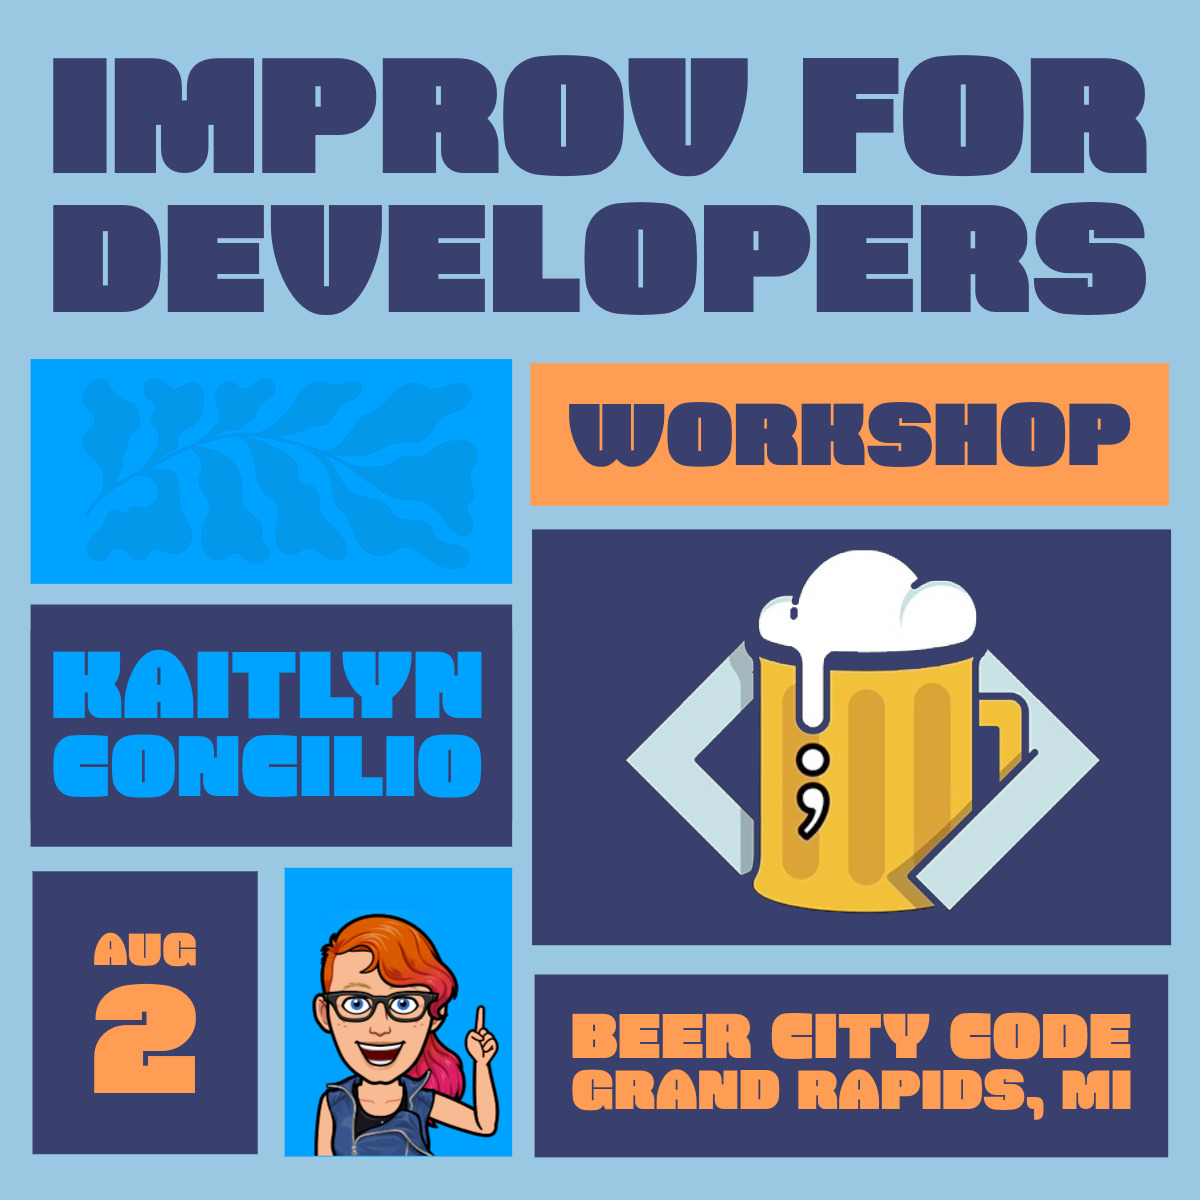 An image promoting my improv for developers workshop at Beer City Code